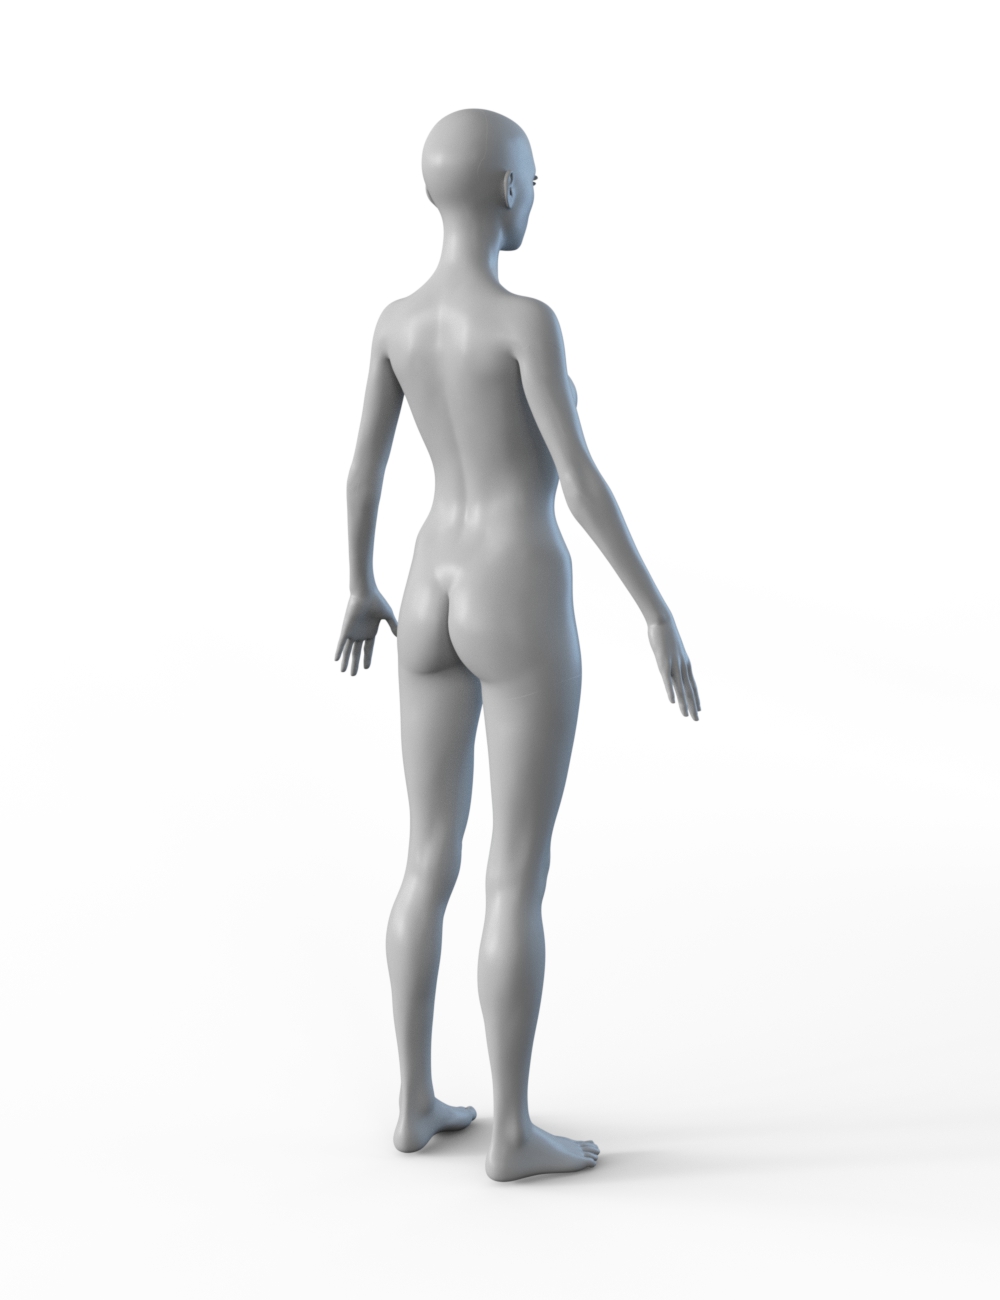 FBX- Base Male Seventies Style by: Paleo, 3D Models by Daz 3D